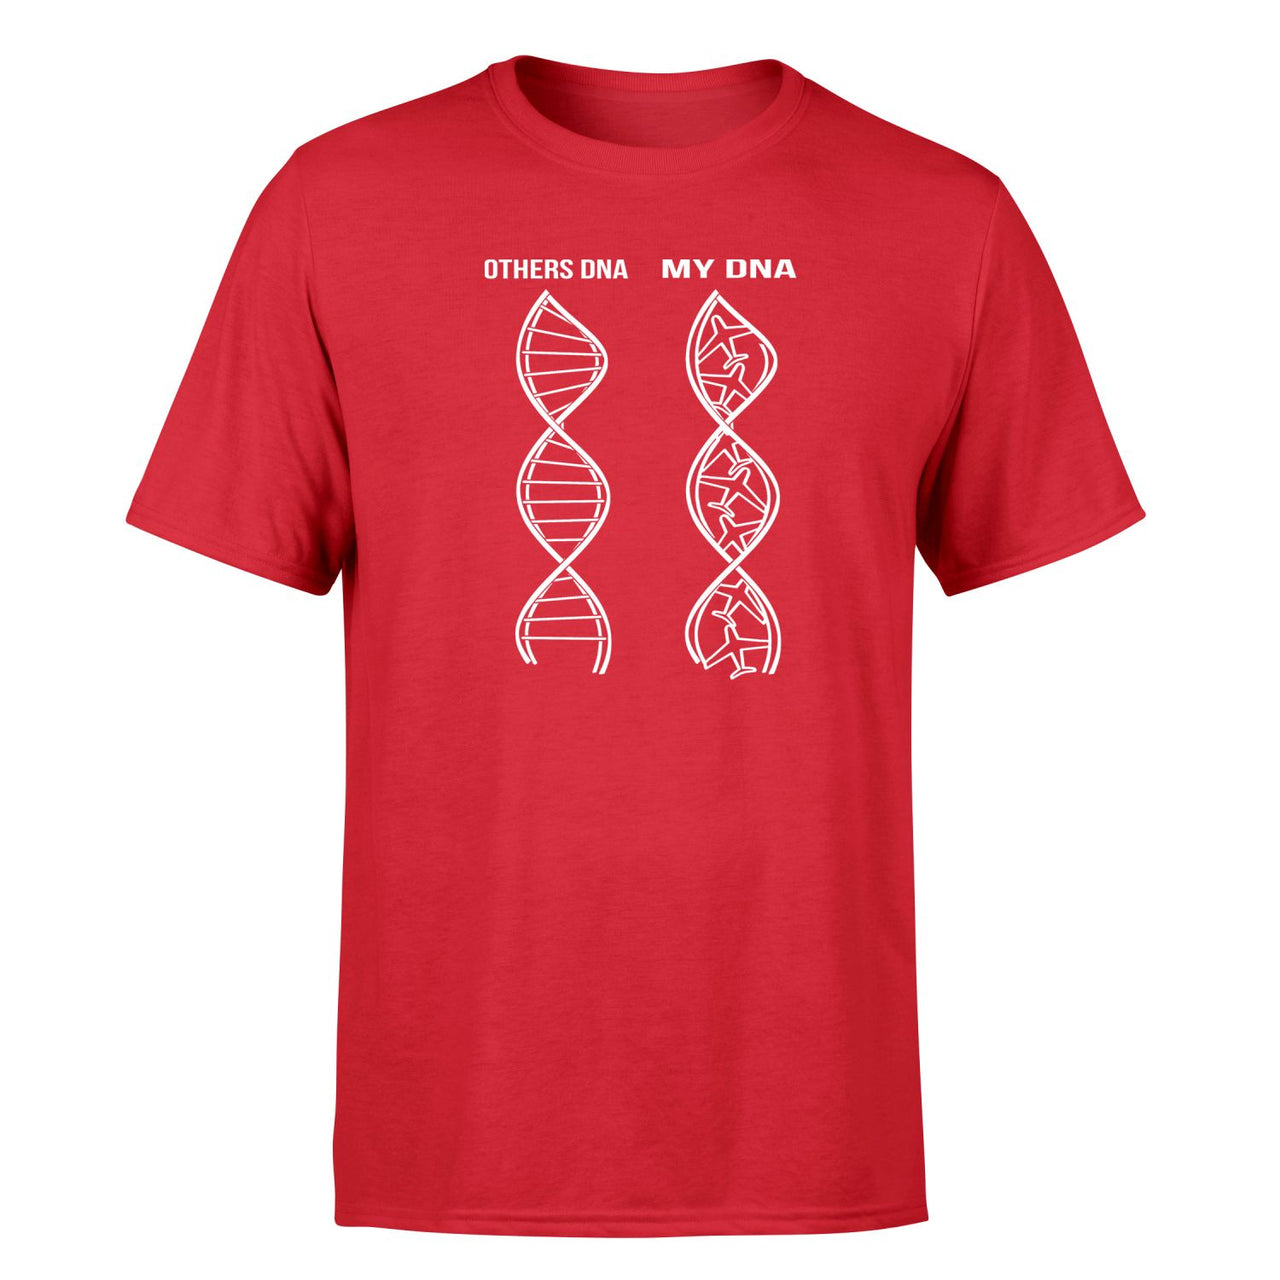 Aviation DNA Designed T-Shirts